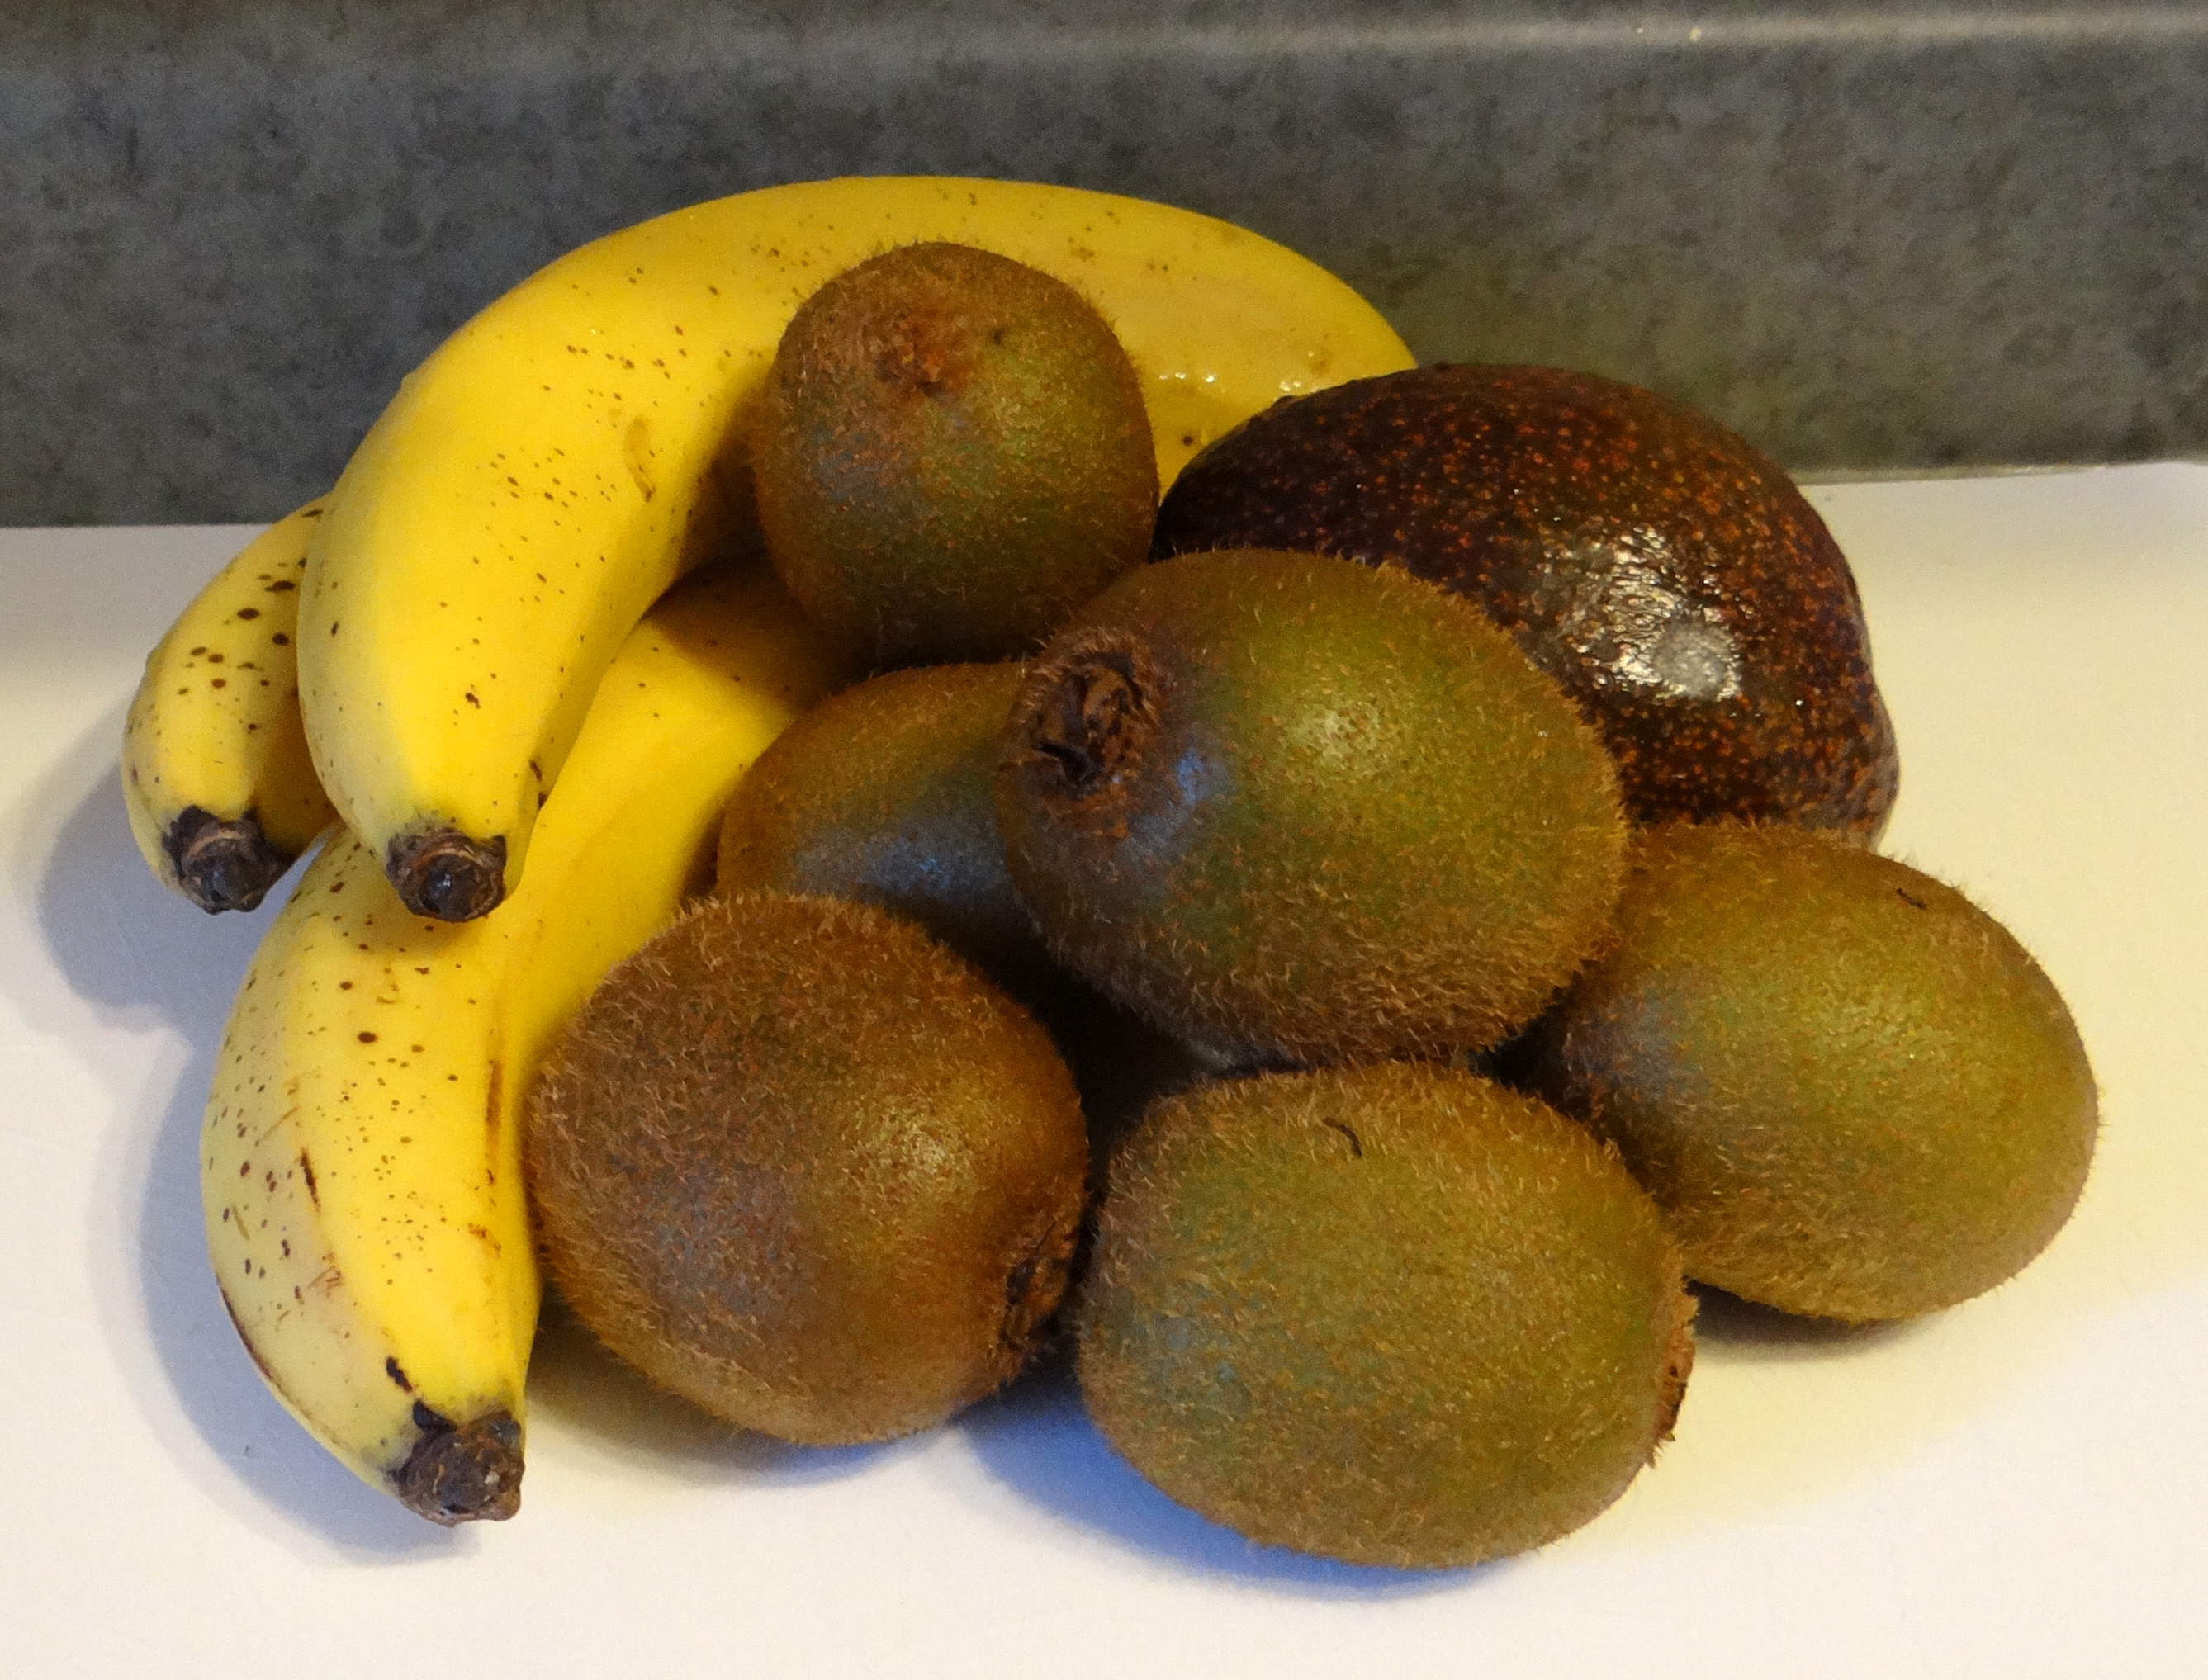 Organic banana, avocado, and kiwi